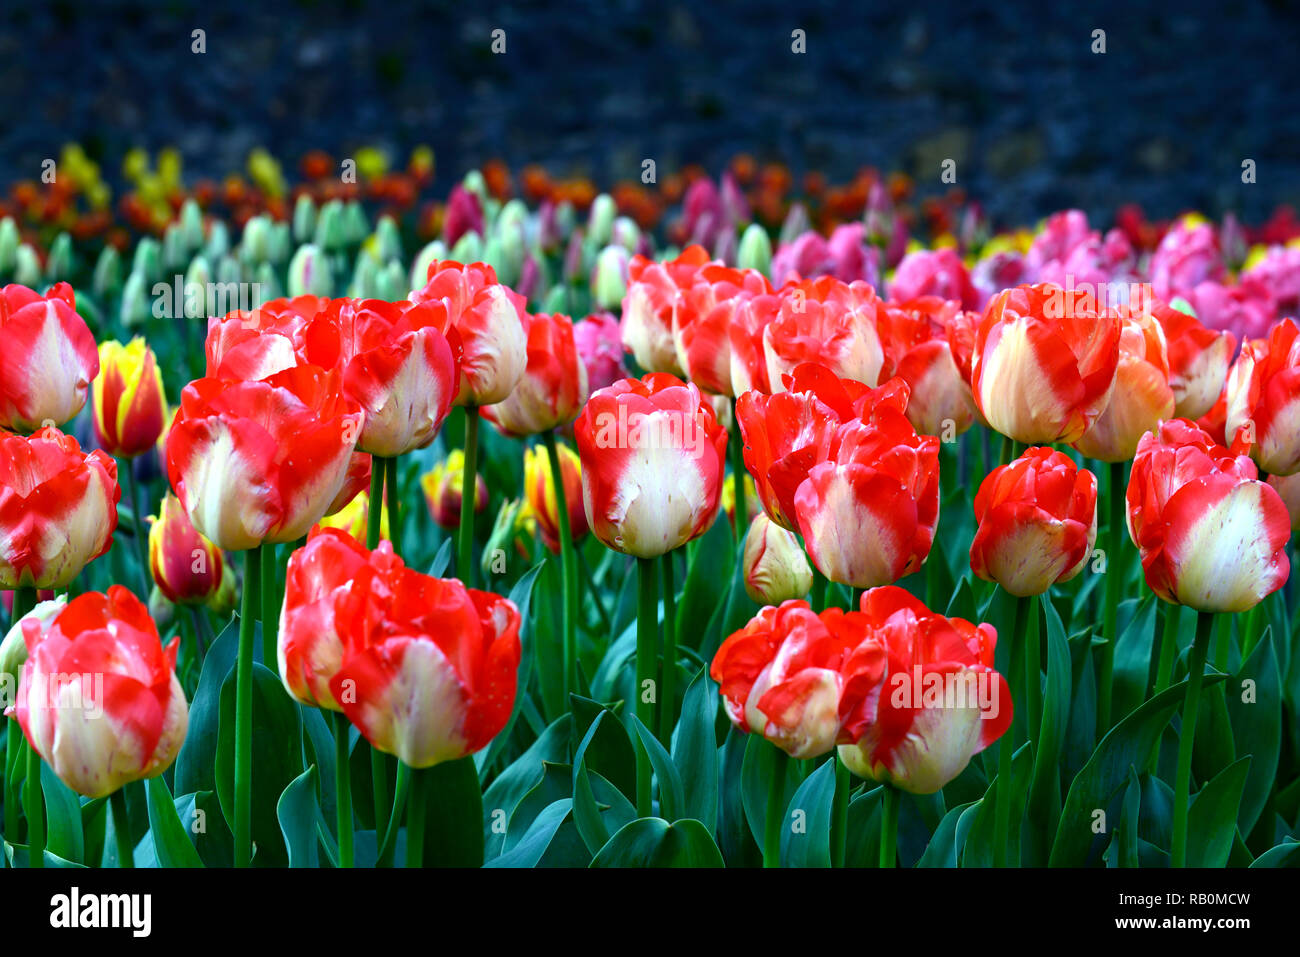 tulipa american dream,tulip american dream,red yellow,bicolor,darwin hybrid tulip,tulips,flower,flowers,garden,RM Floral Stock Photo